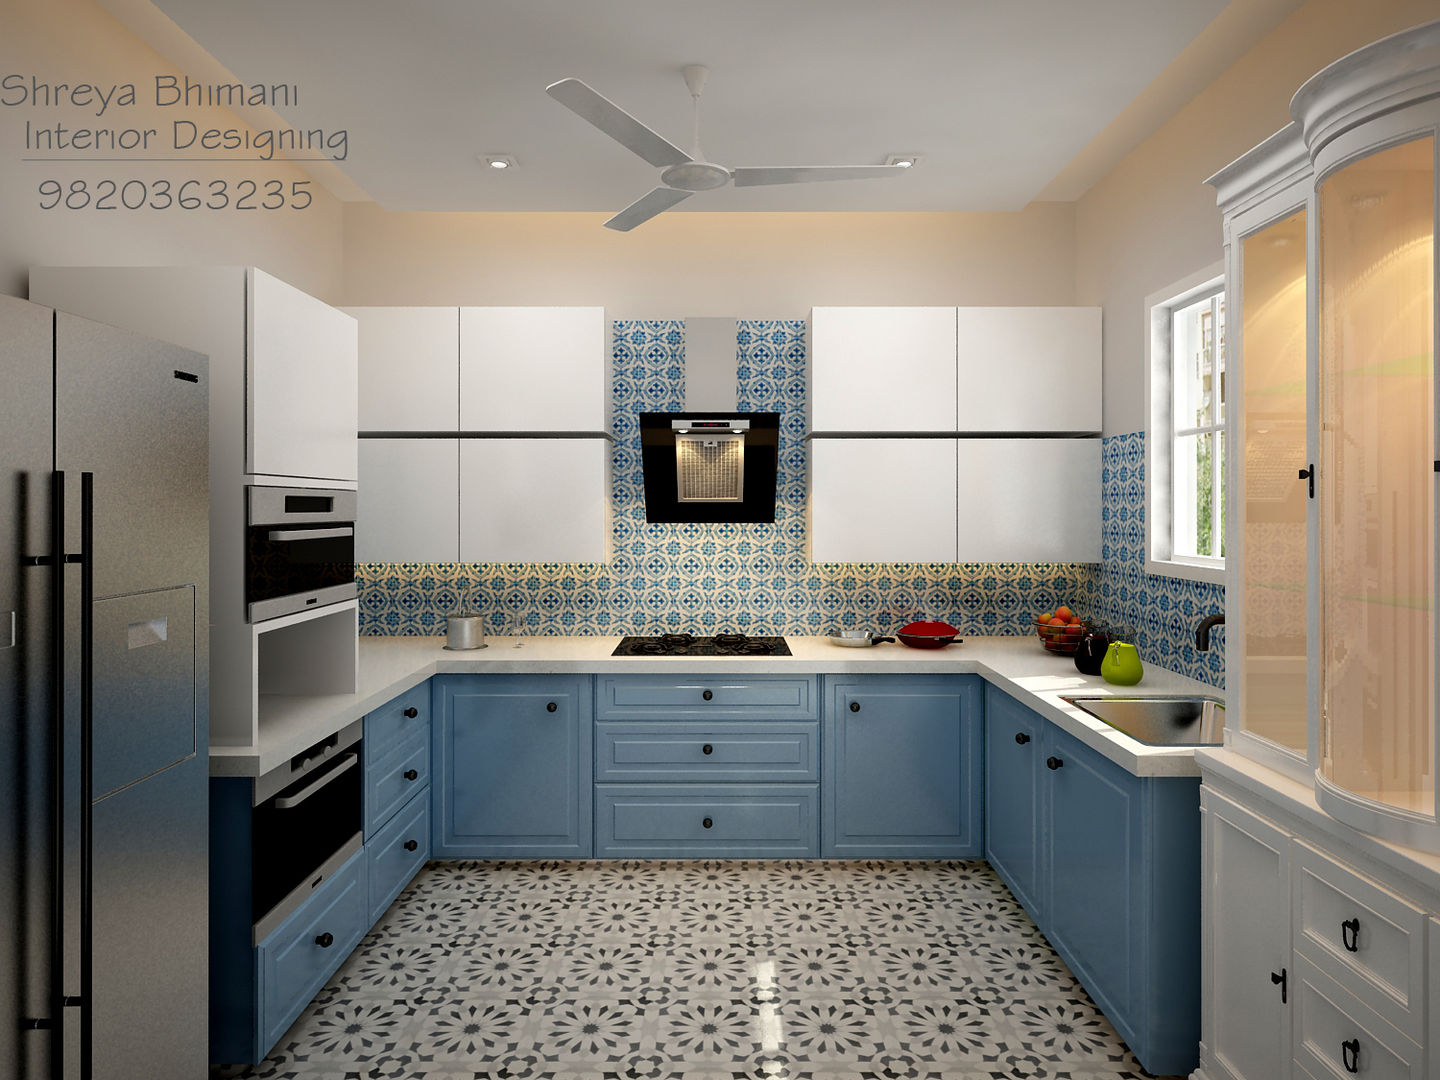 Kitchen Shreya Bhimani Designs Eclectic style kitchen warm,eclectic,modern,kitchen,utility,prints